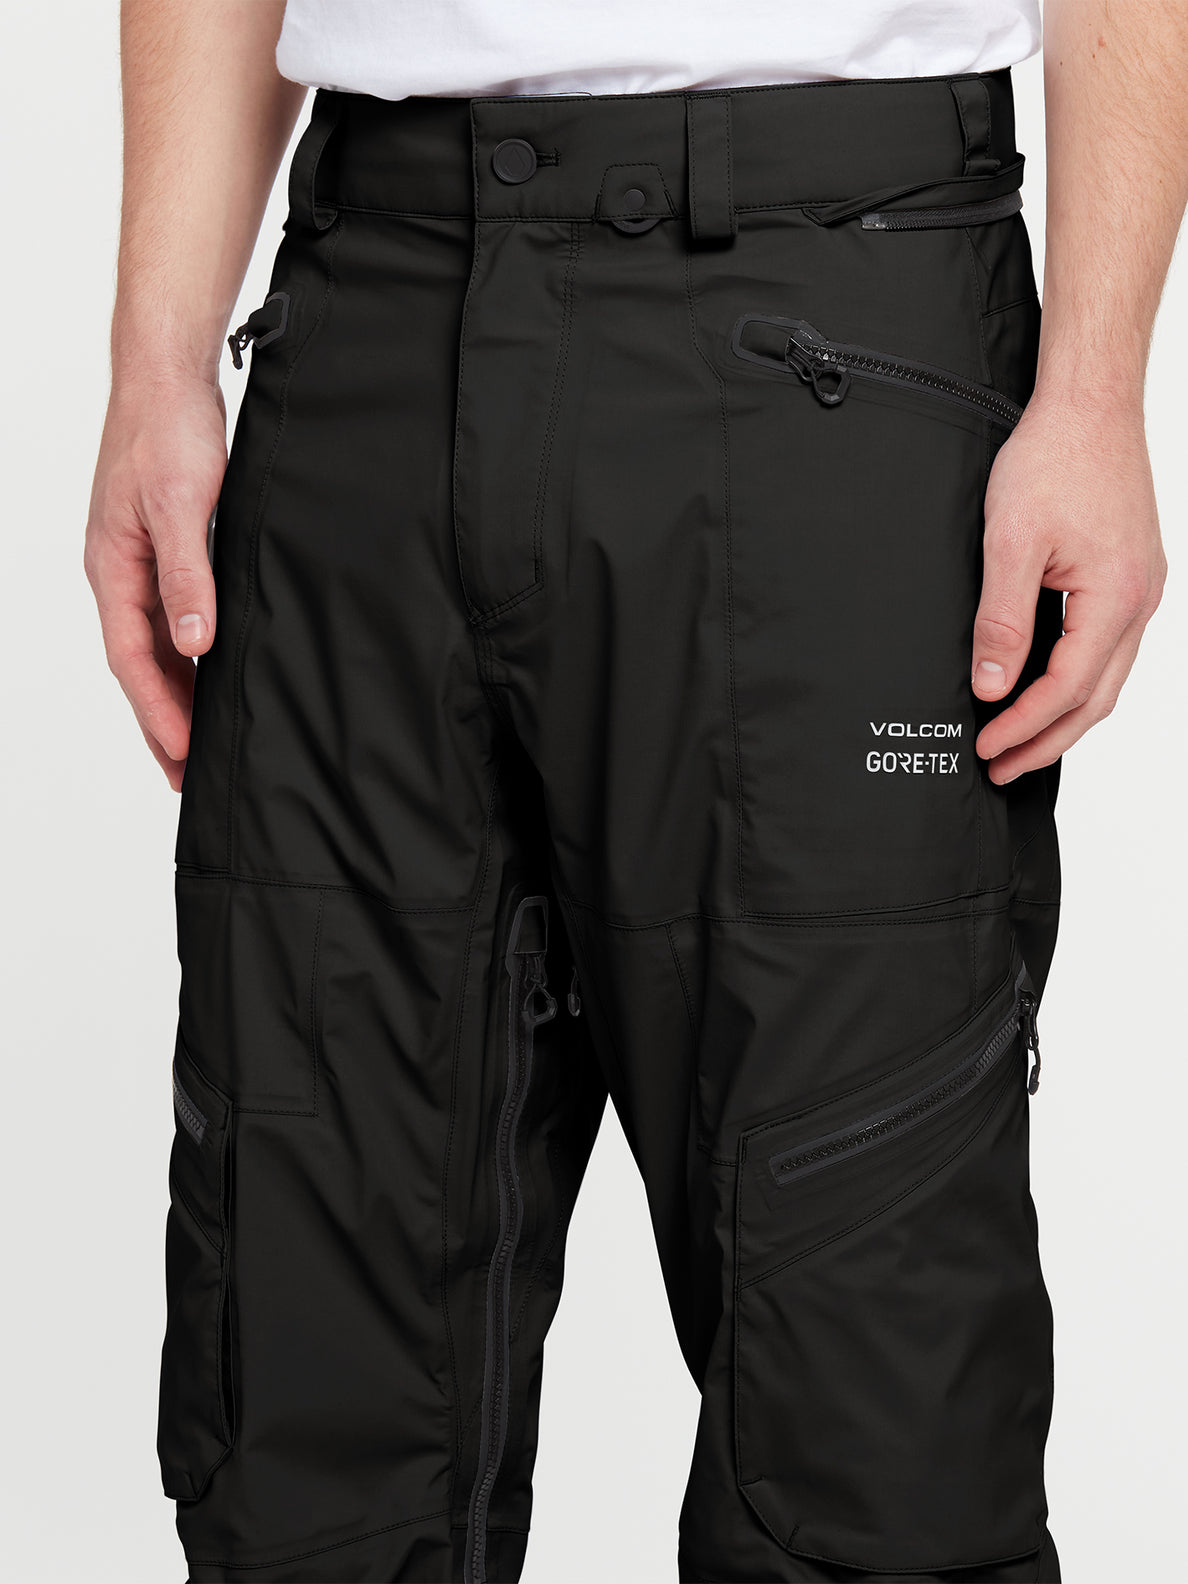 Guch Stretch Gore-Tex Trousers - BLACK (G1352201_BLK) [32]